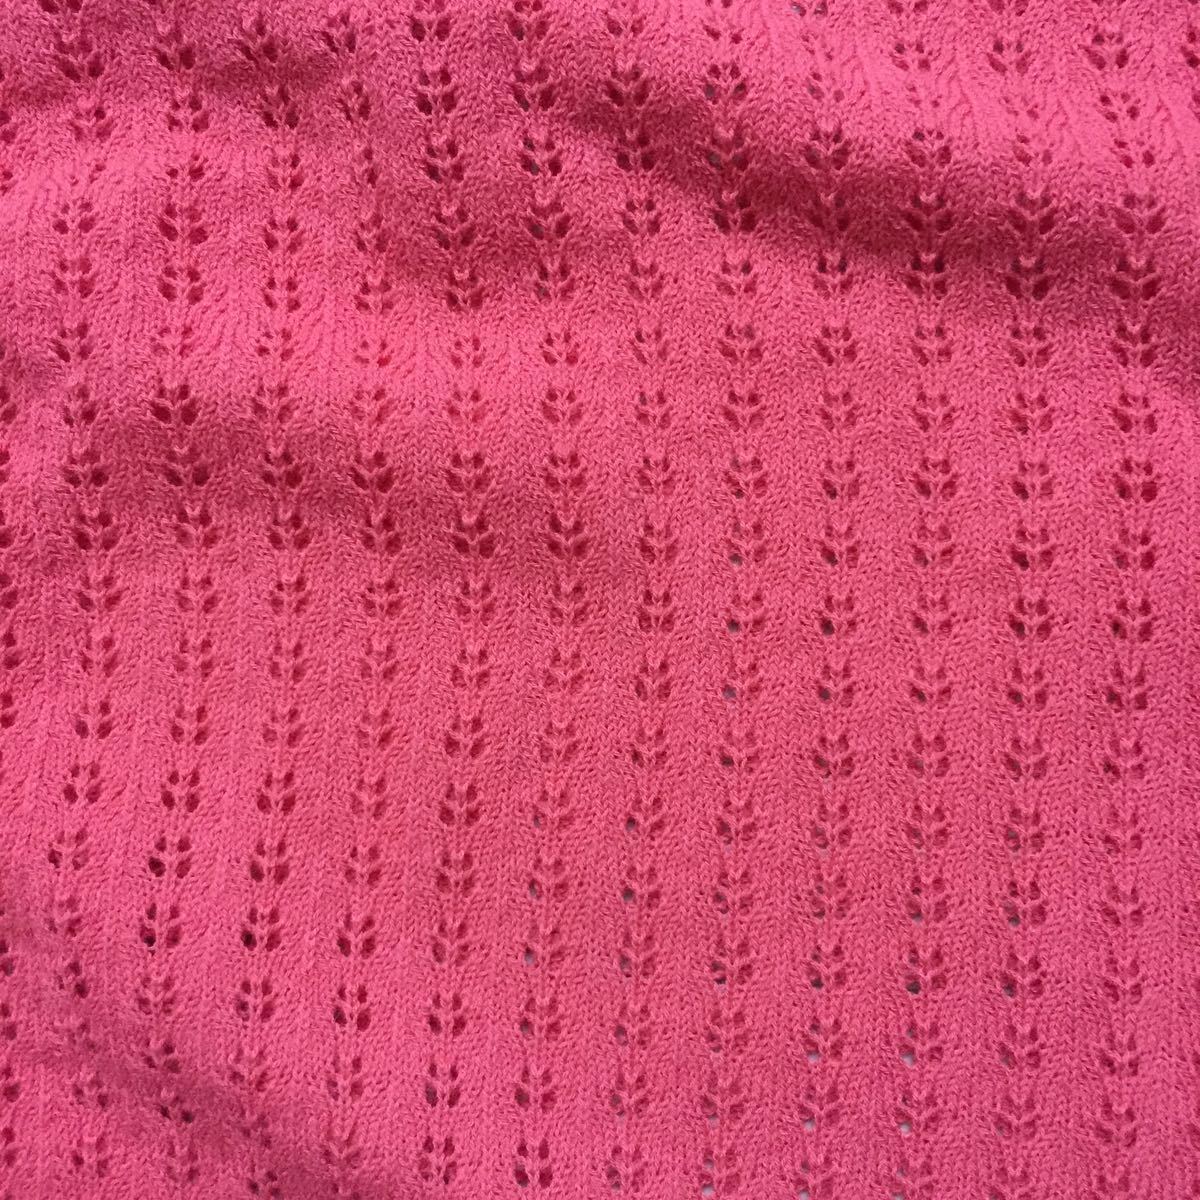  unused not yet arrived ef-de ef-de largish cotton . flower motif biju- button ... braided short sleeves cardigan 2015 size 21 salmon pink series red?